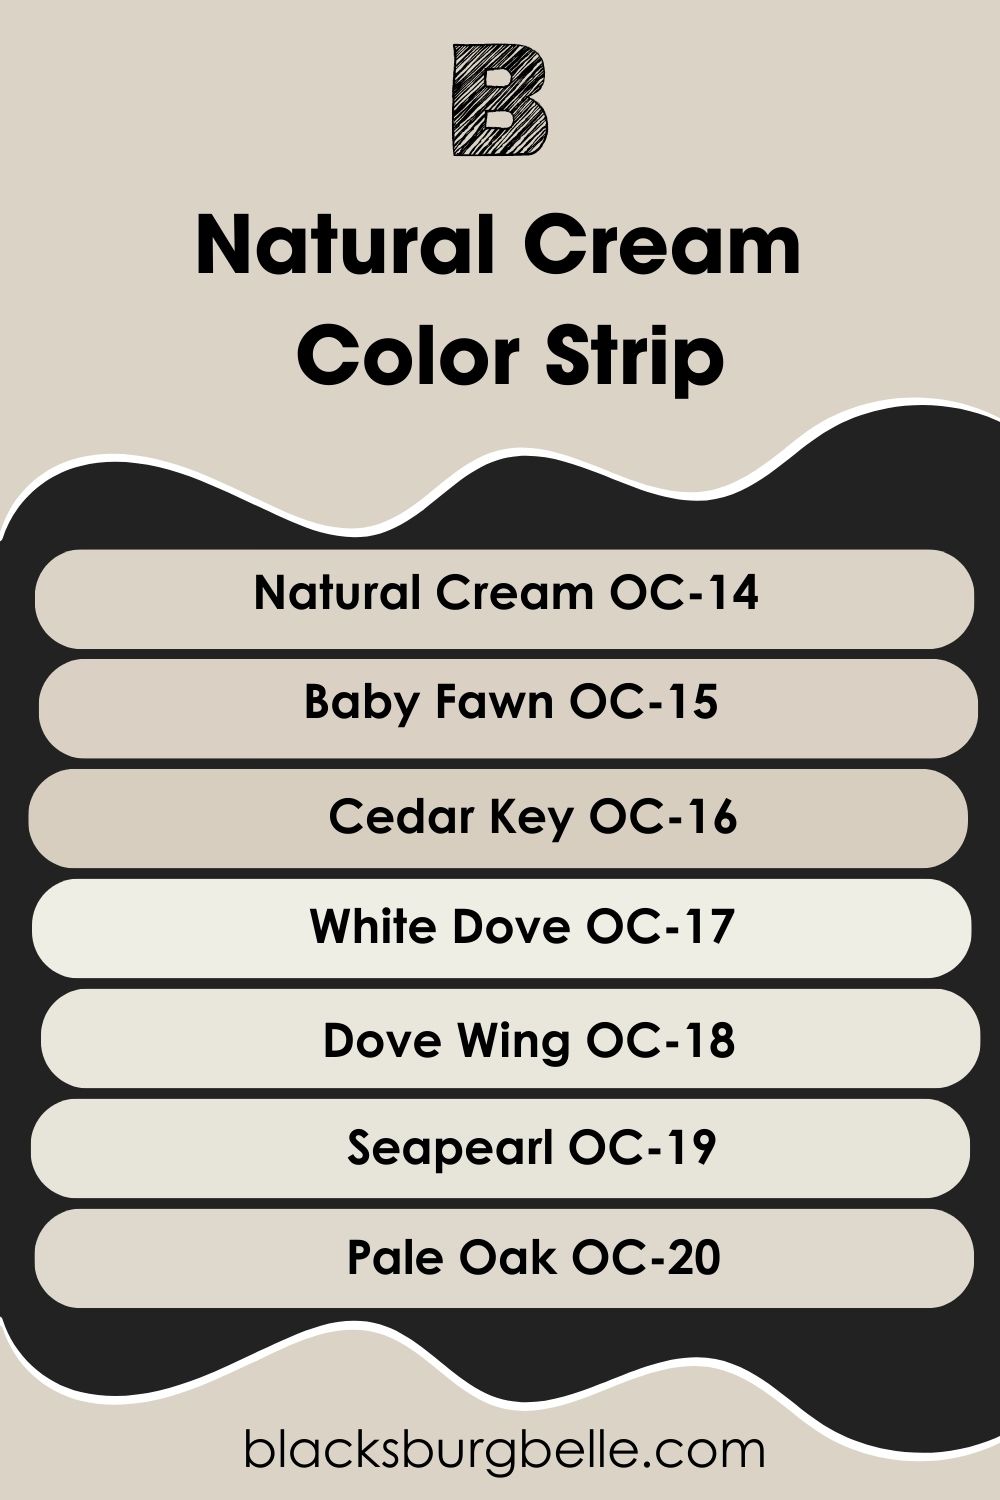 Natural Cream Color Strip